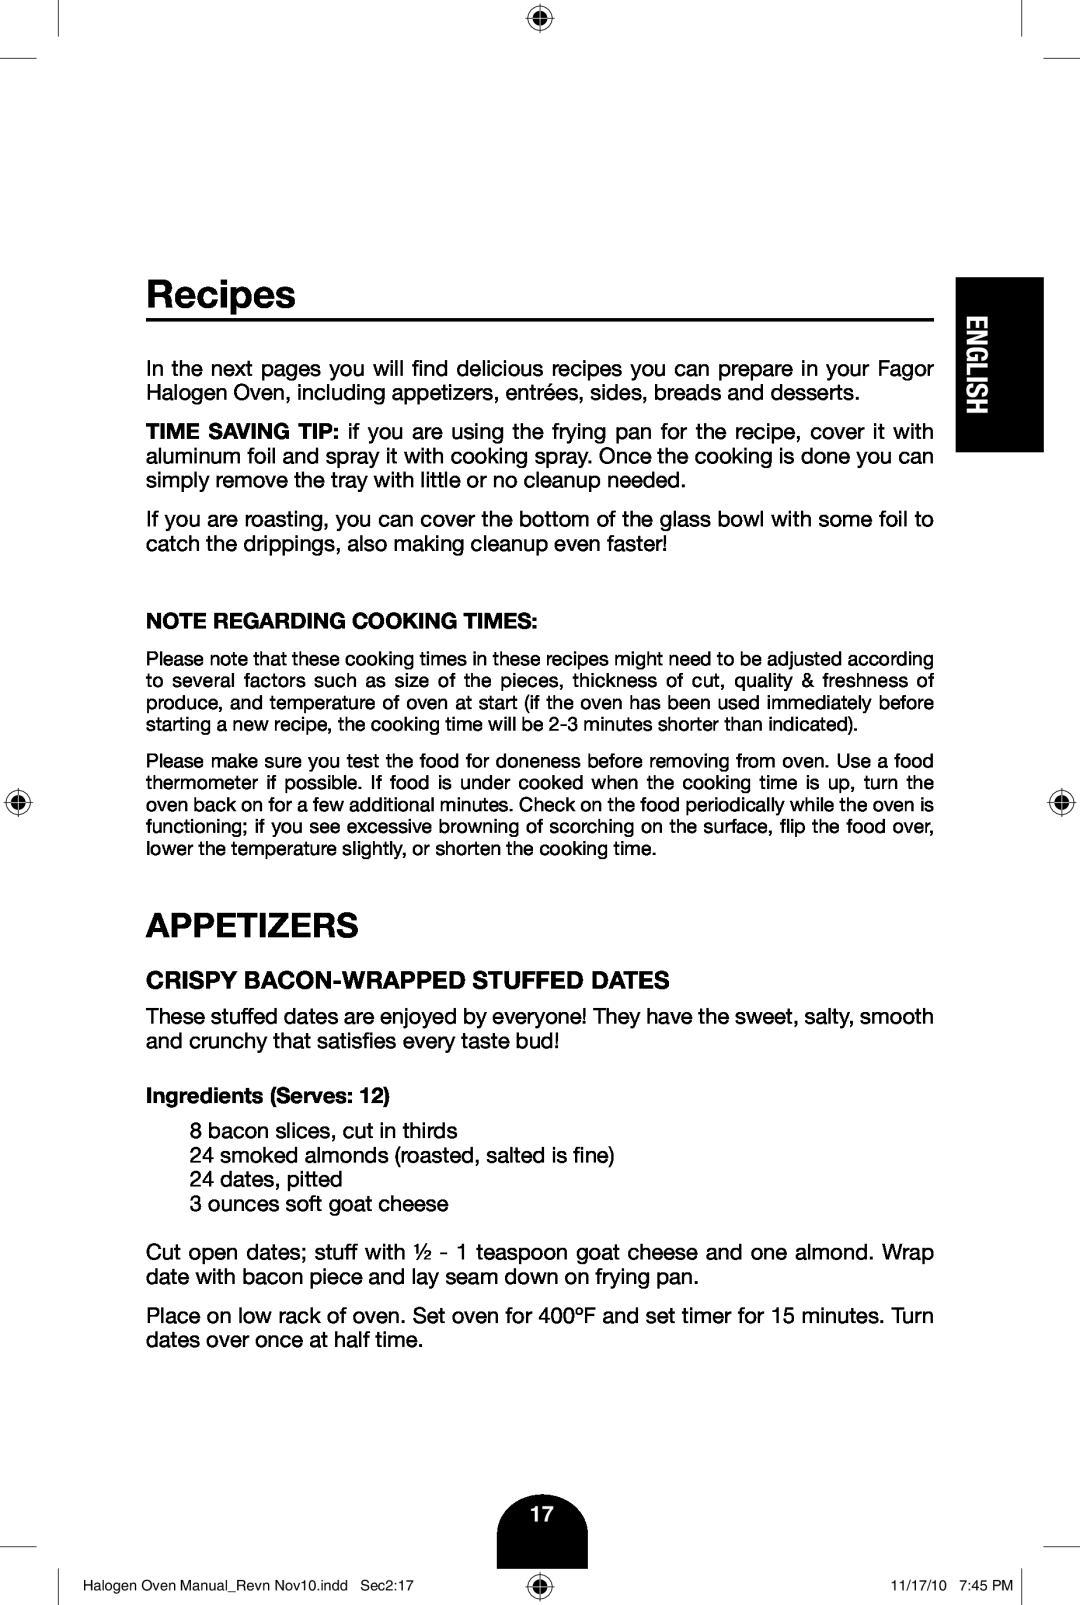 Fagor America 670040380 user manual Recipes, Appetizers, Crispy Bacon-Wrapped Stuffed Dates, English 